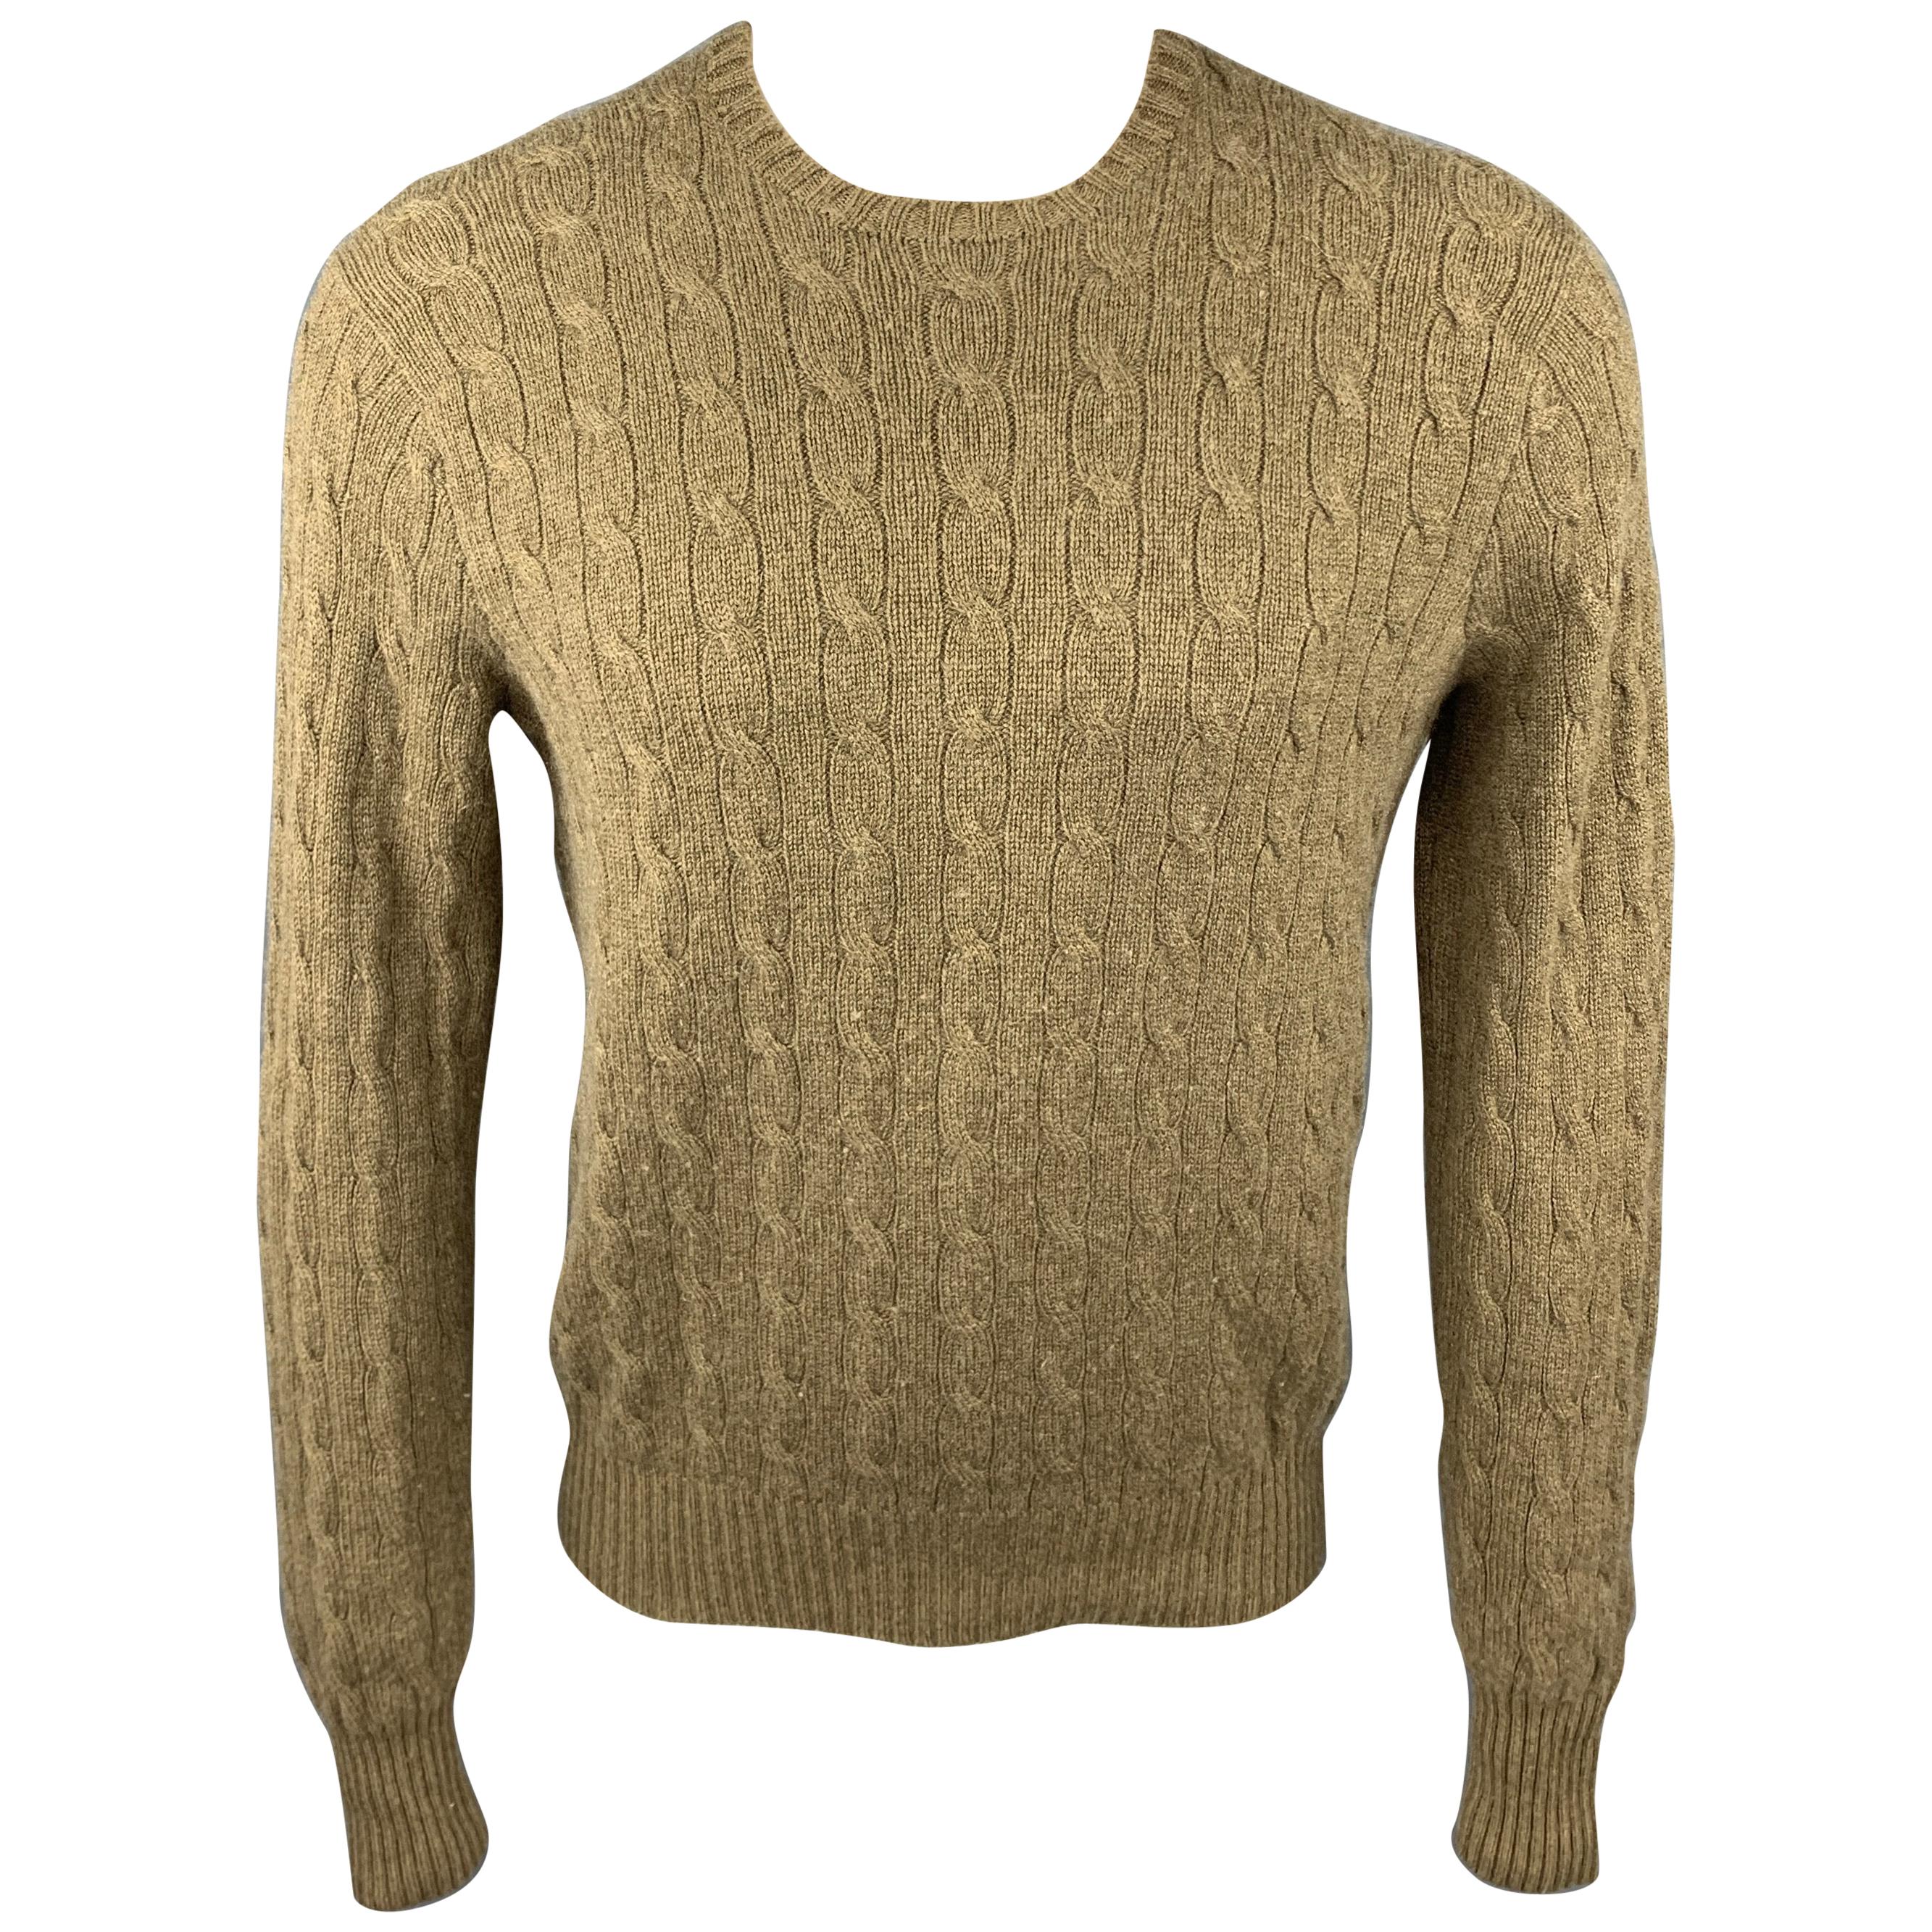 RALPH LAUREN Size M Olive Cable Knit Cashmere Crew-Neck Sweater